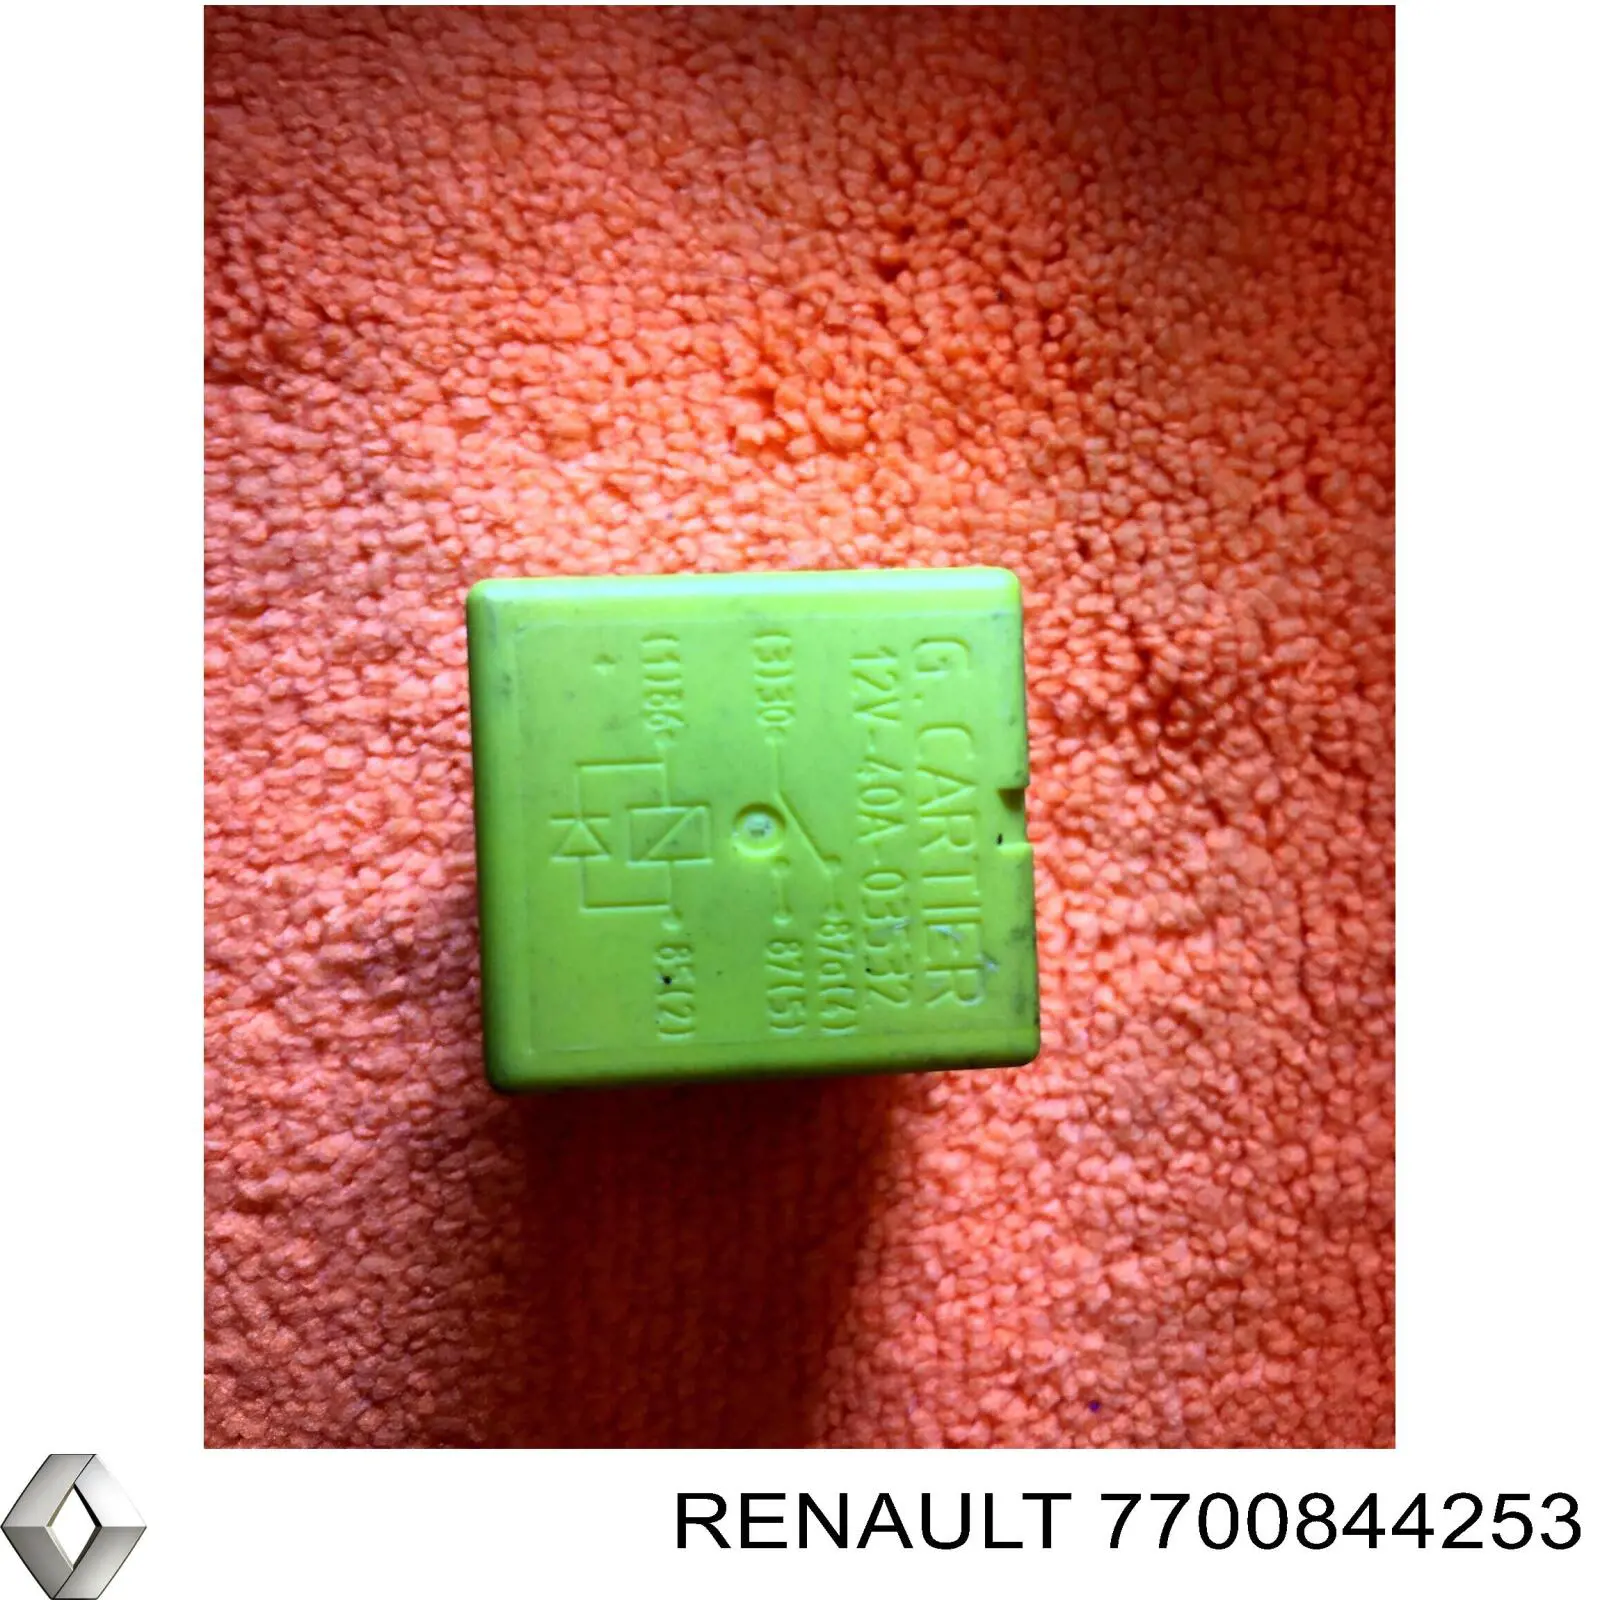 7700844253 Renault (RVI) relé eléctrico multifuncional